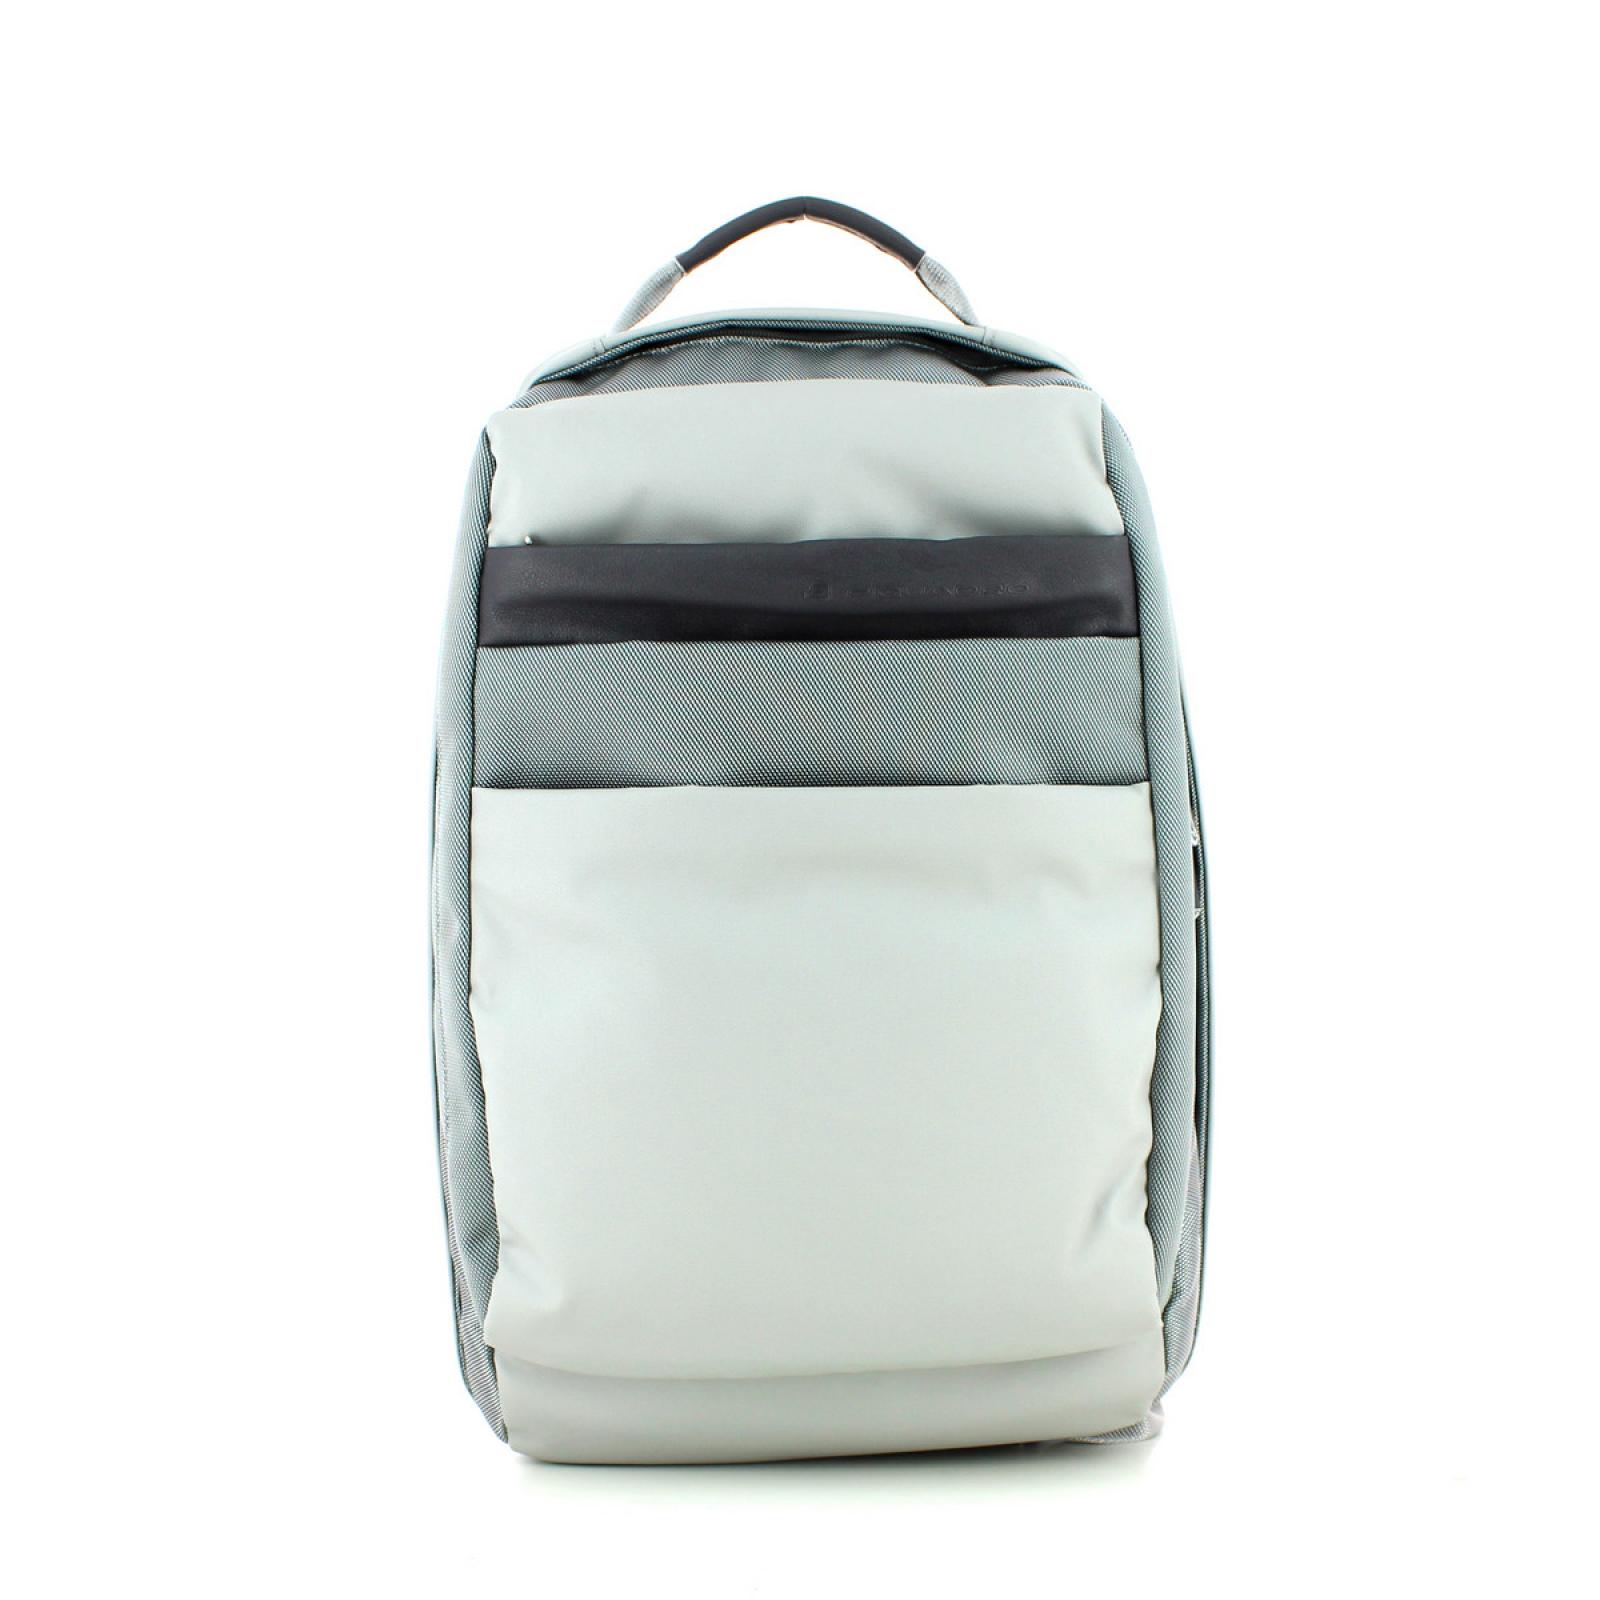 Computer backpack Orinoco-GR-UN